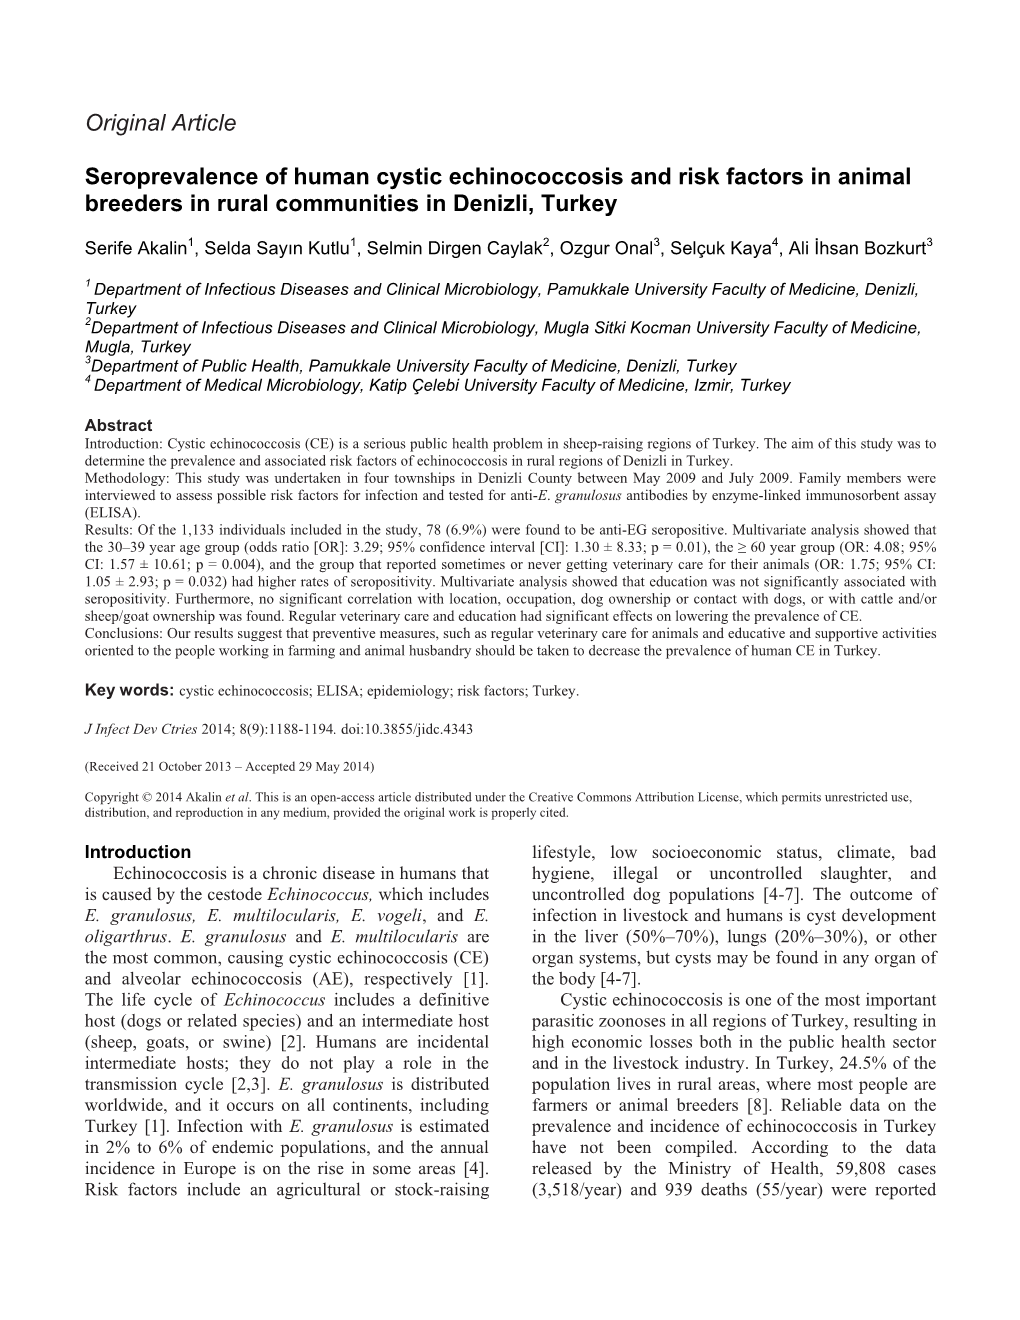 Original Article Seroprevalence of Human Cystic Echinococcosis And